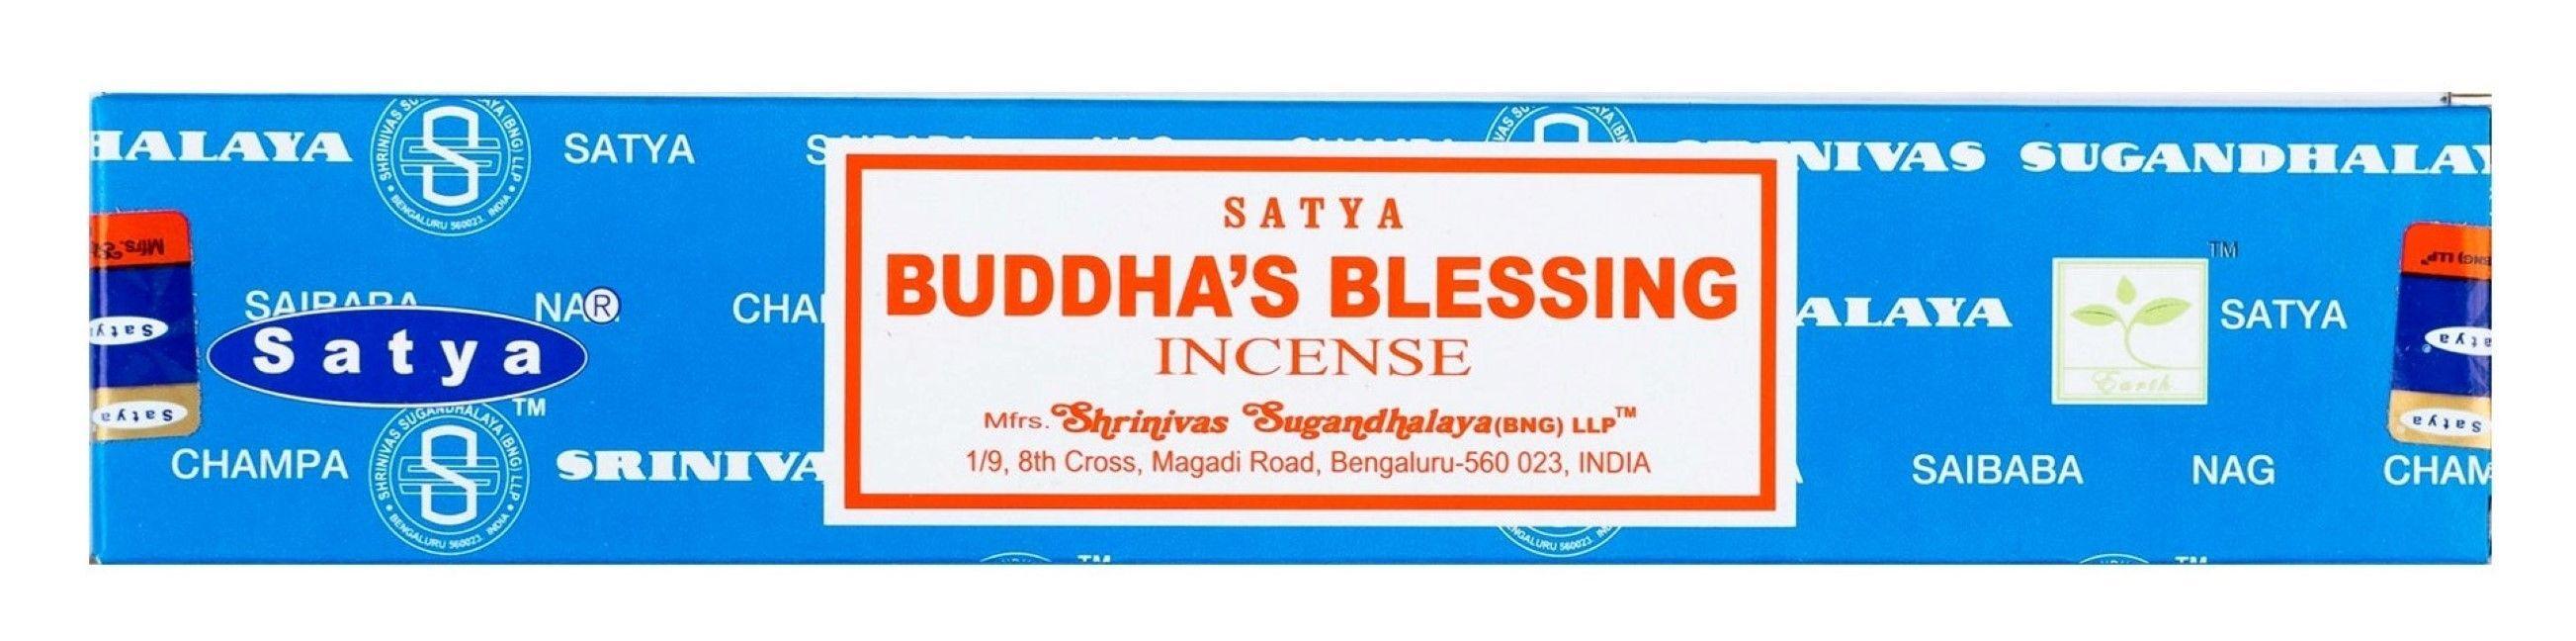 Räucherstäbchen Satya Sai Baba "Buddha's Blessing" 15gr